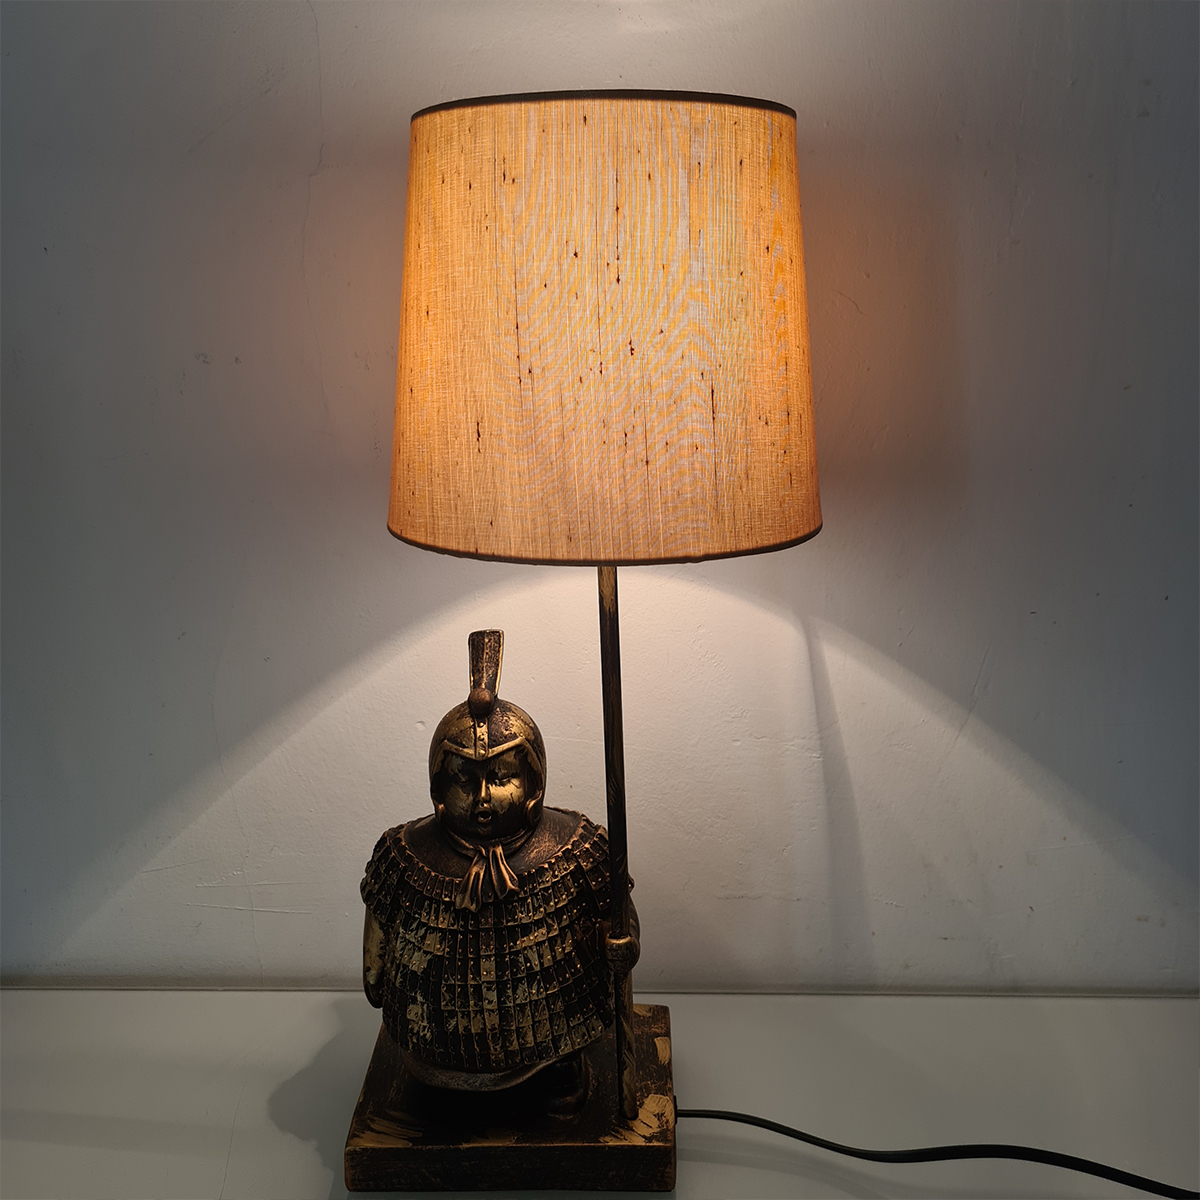 Xian soldier lamp 43 cm